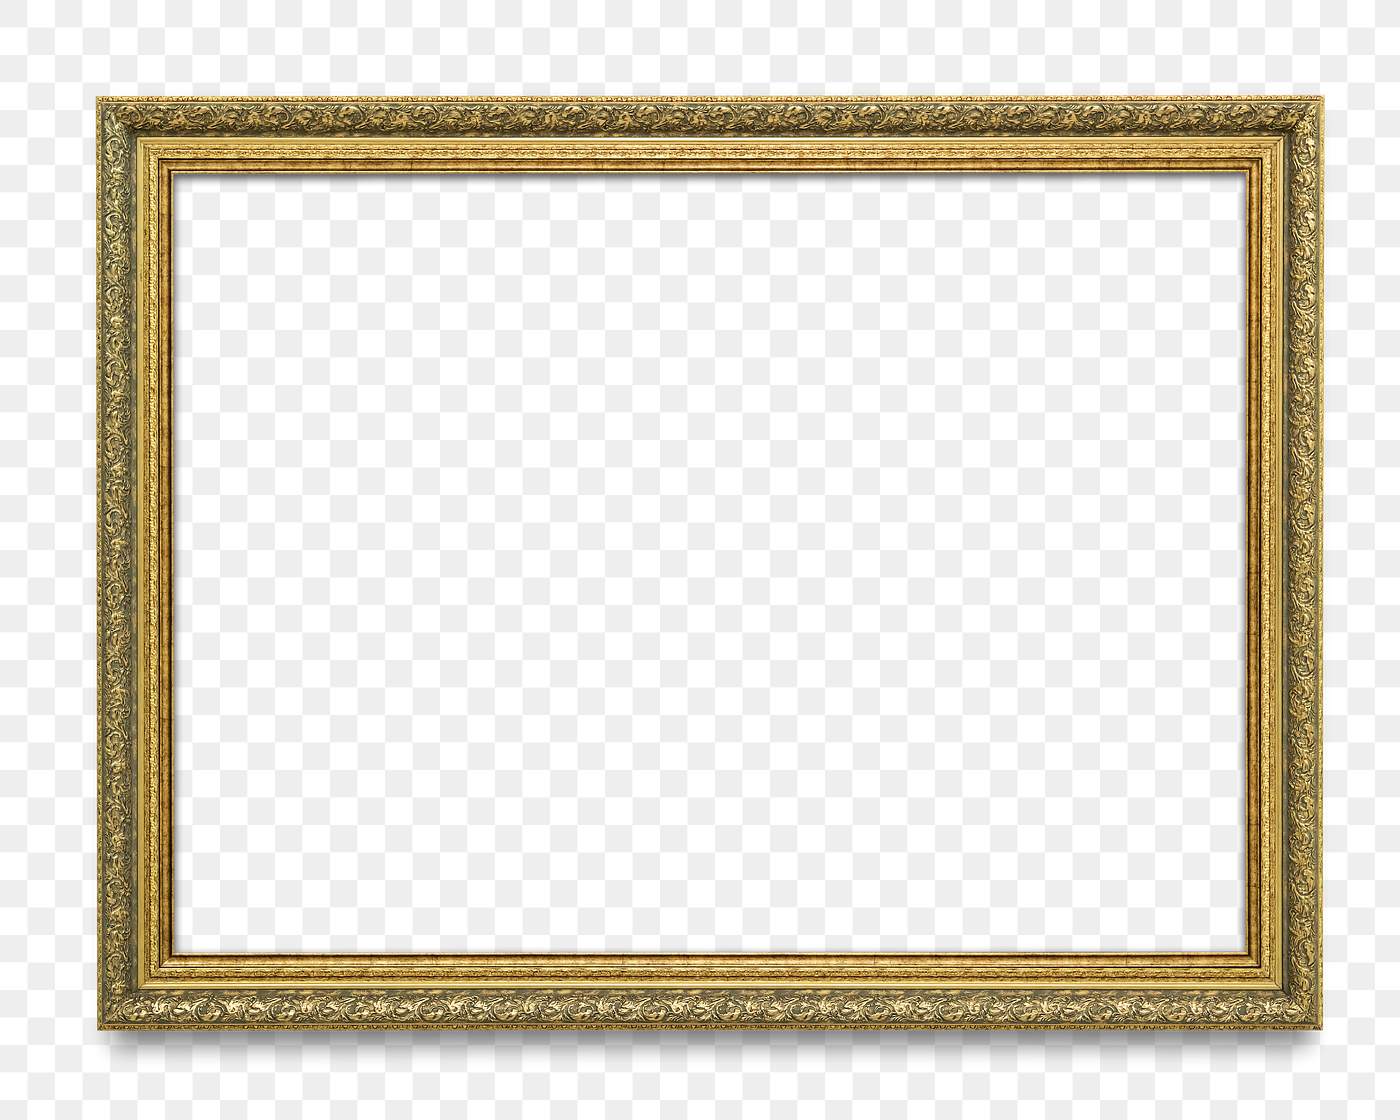 Blank frame transparent png | Royalty free stock transparent png - 1230663